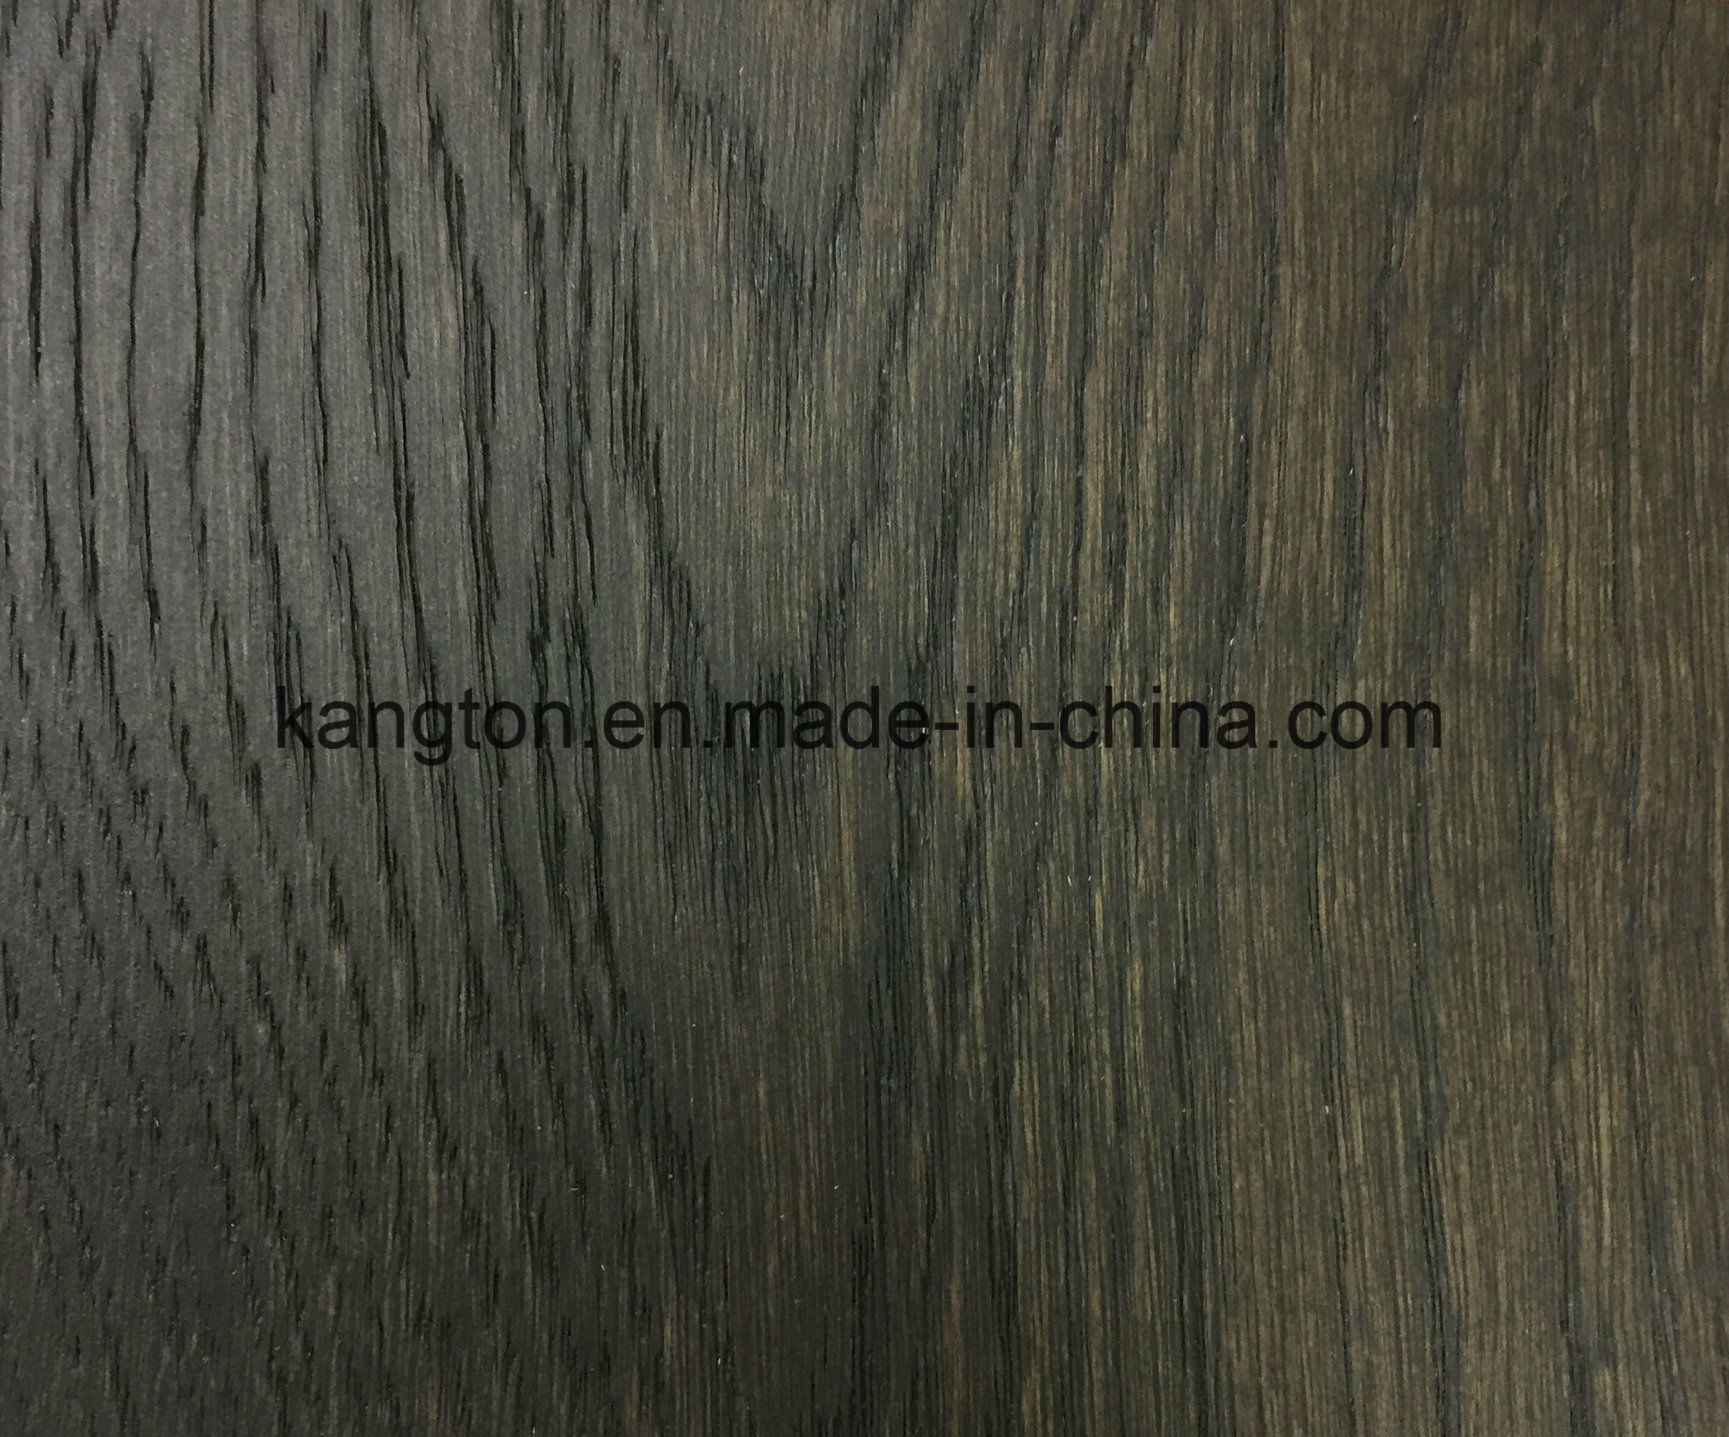 Dark Color EU Oak Engineered Wood Flooring with Less Susceptible